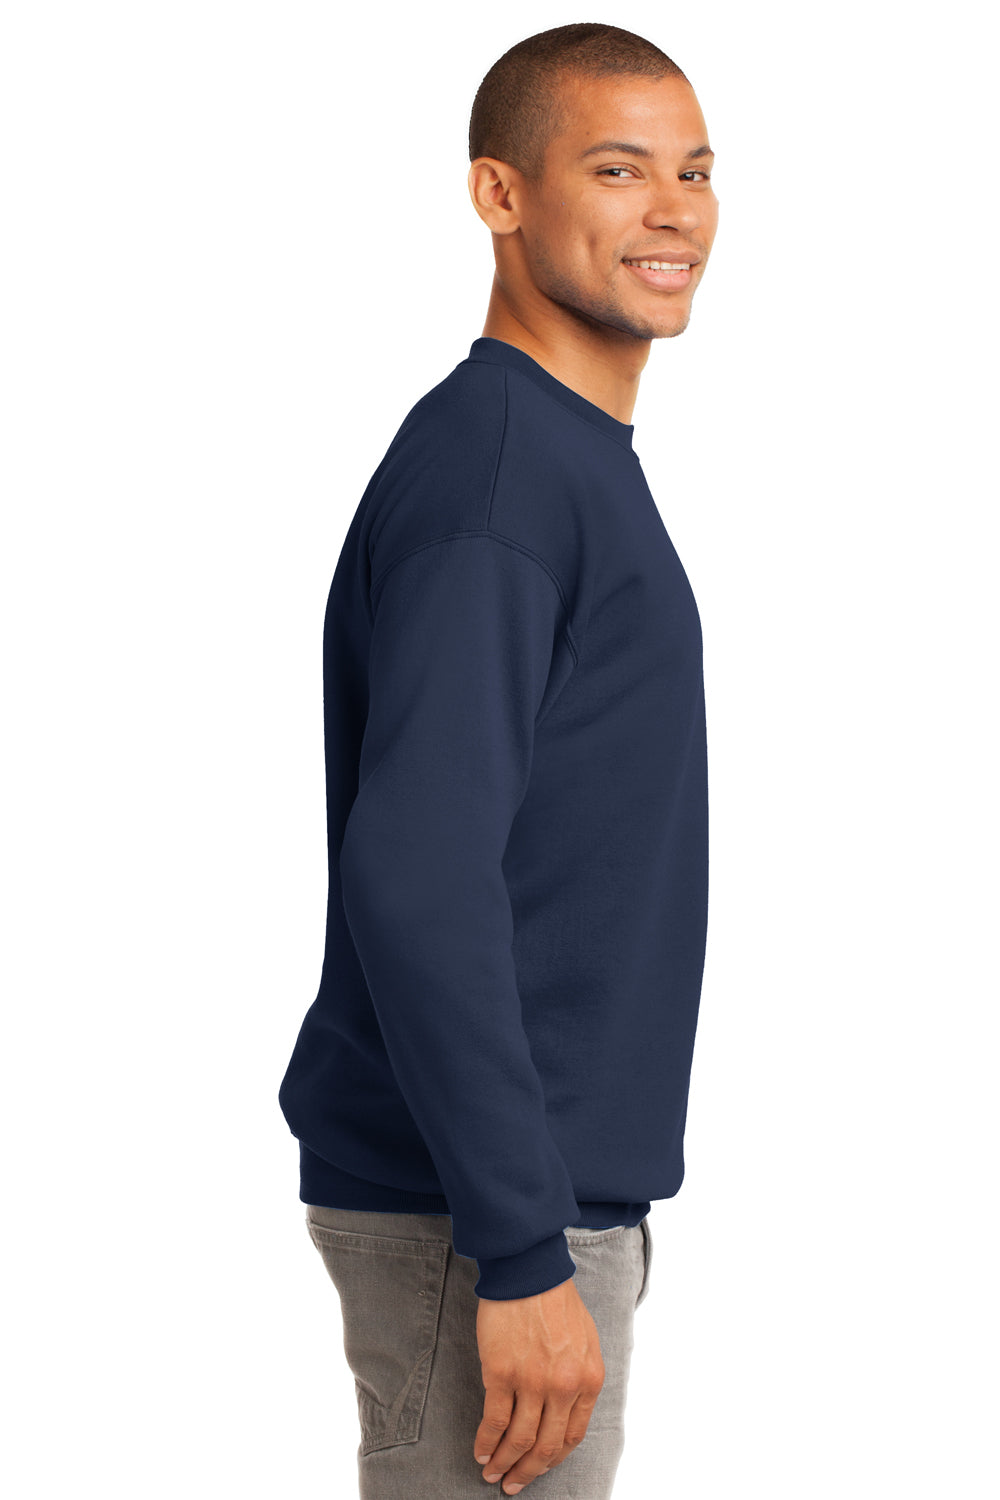 Port & Company PC90 Mens Essential Fleece Crewneck Sweatshirt Navy Blue Side